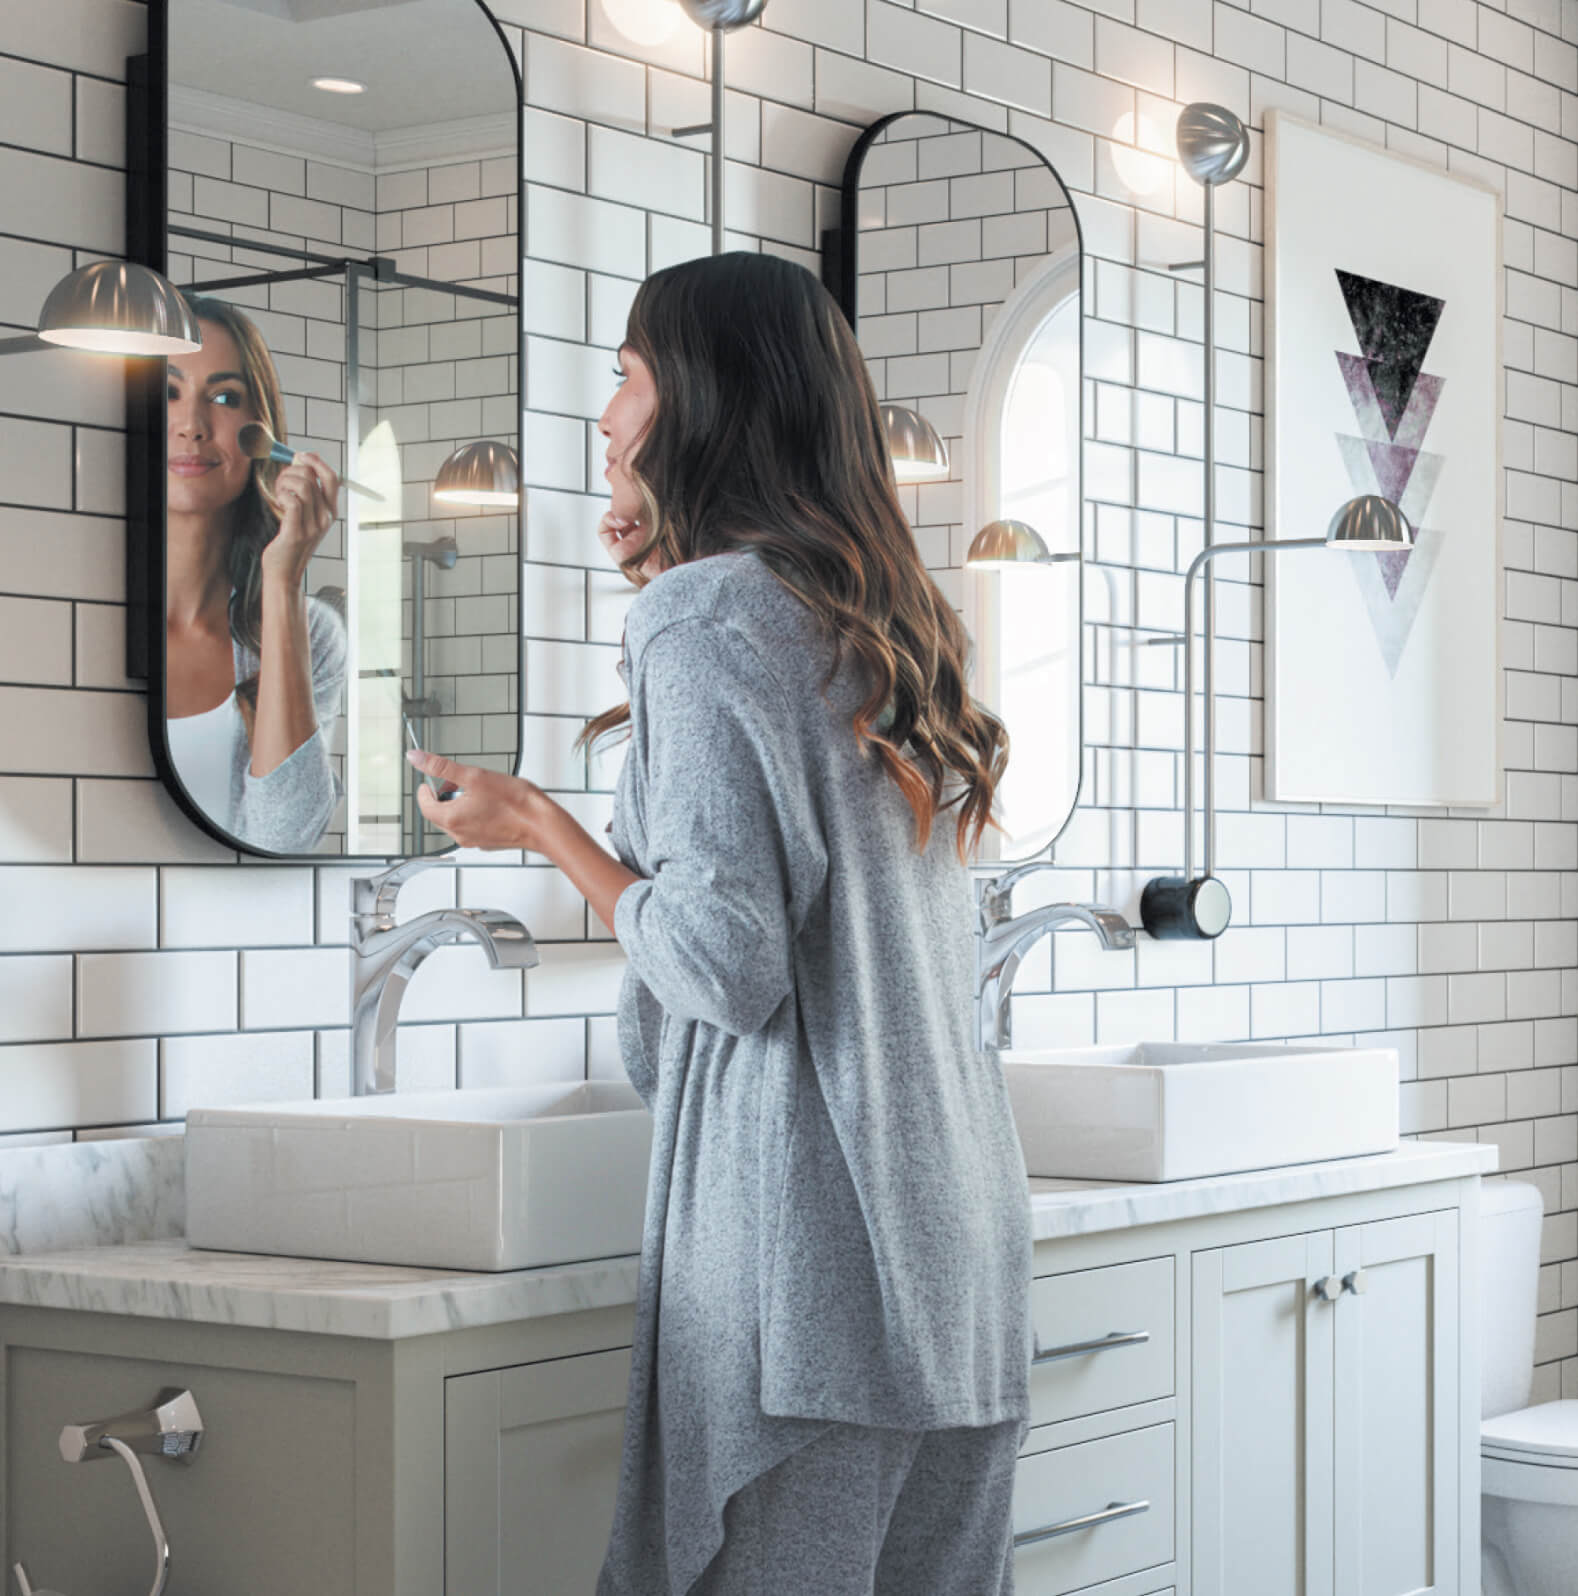 Woman putting makeup in bathroom mirror